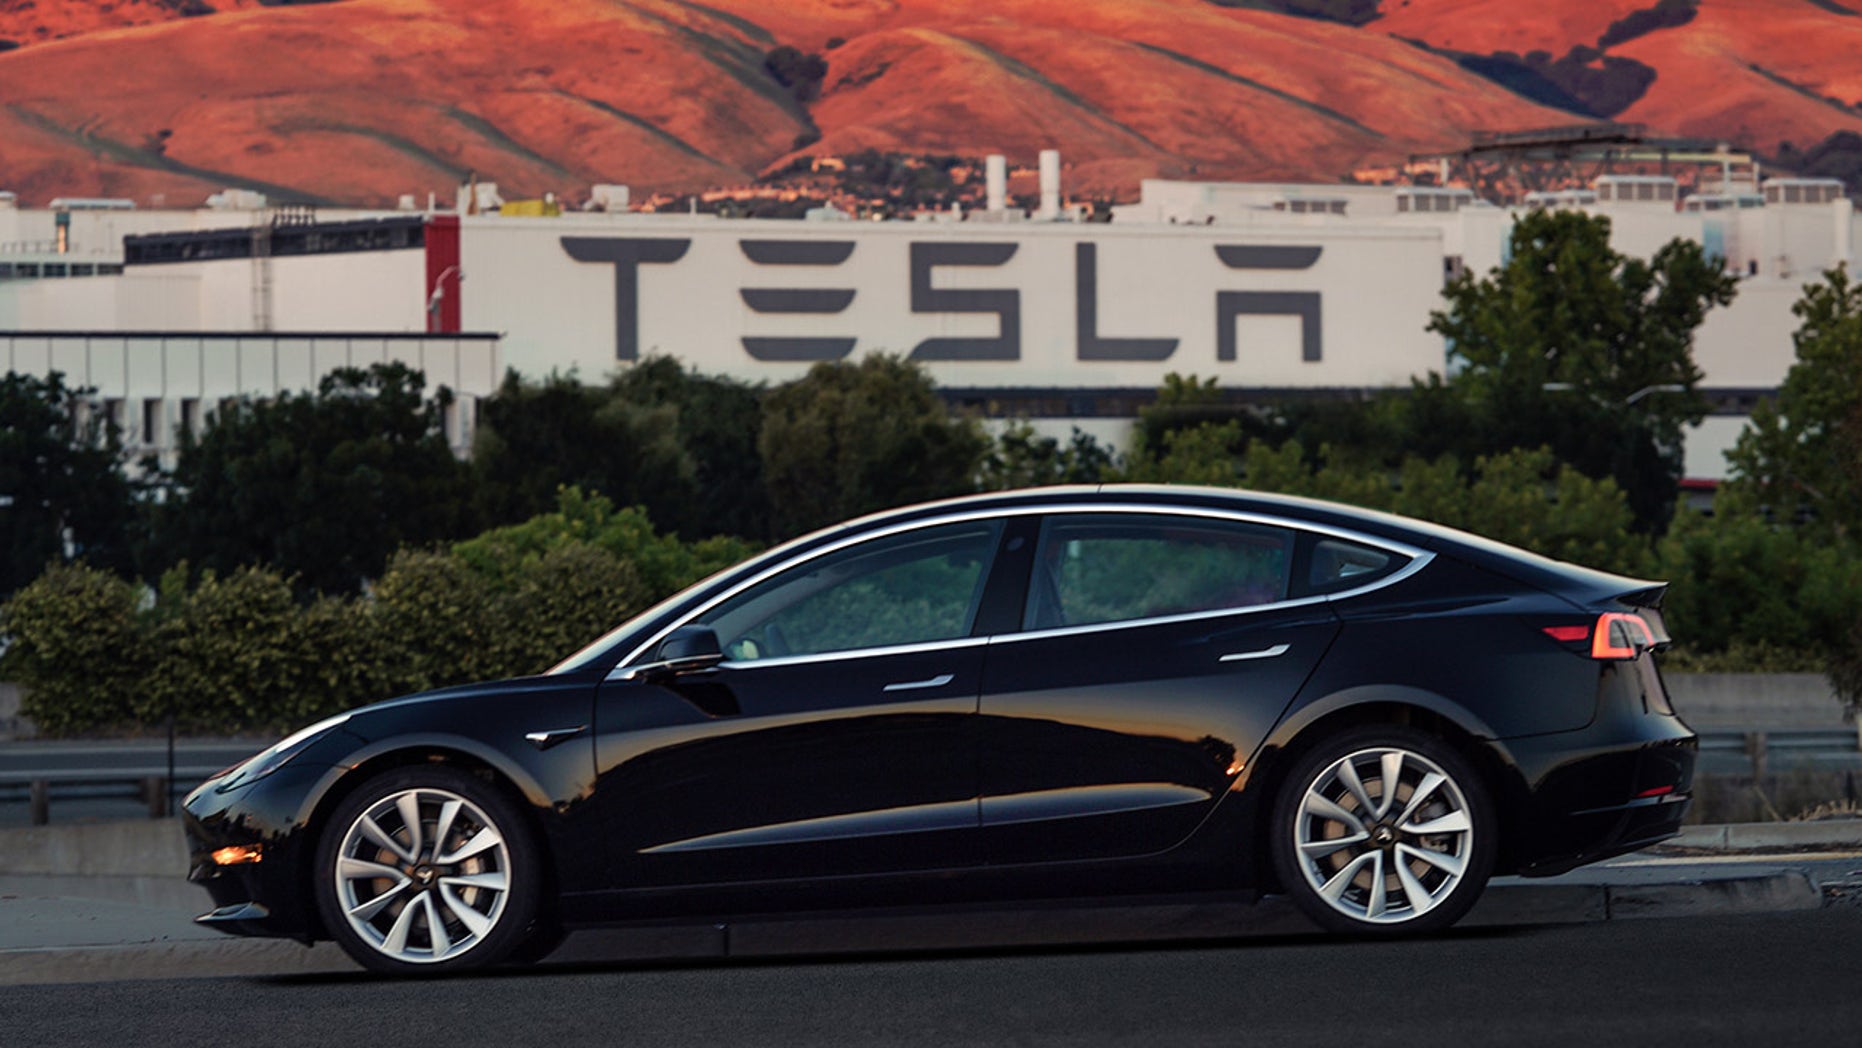 Tesla Model 3 price cut again, now starts at $42,900